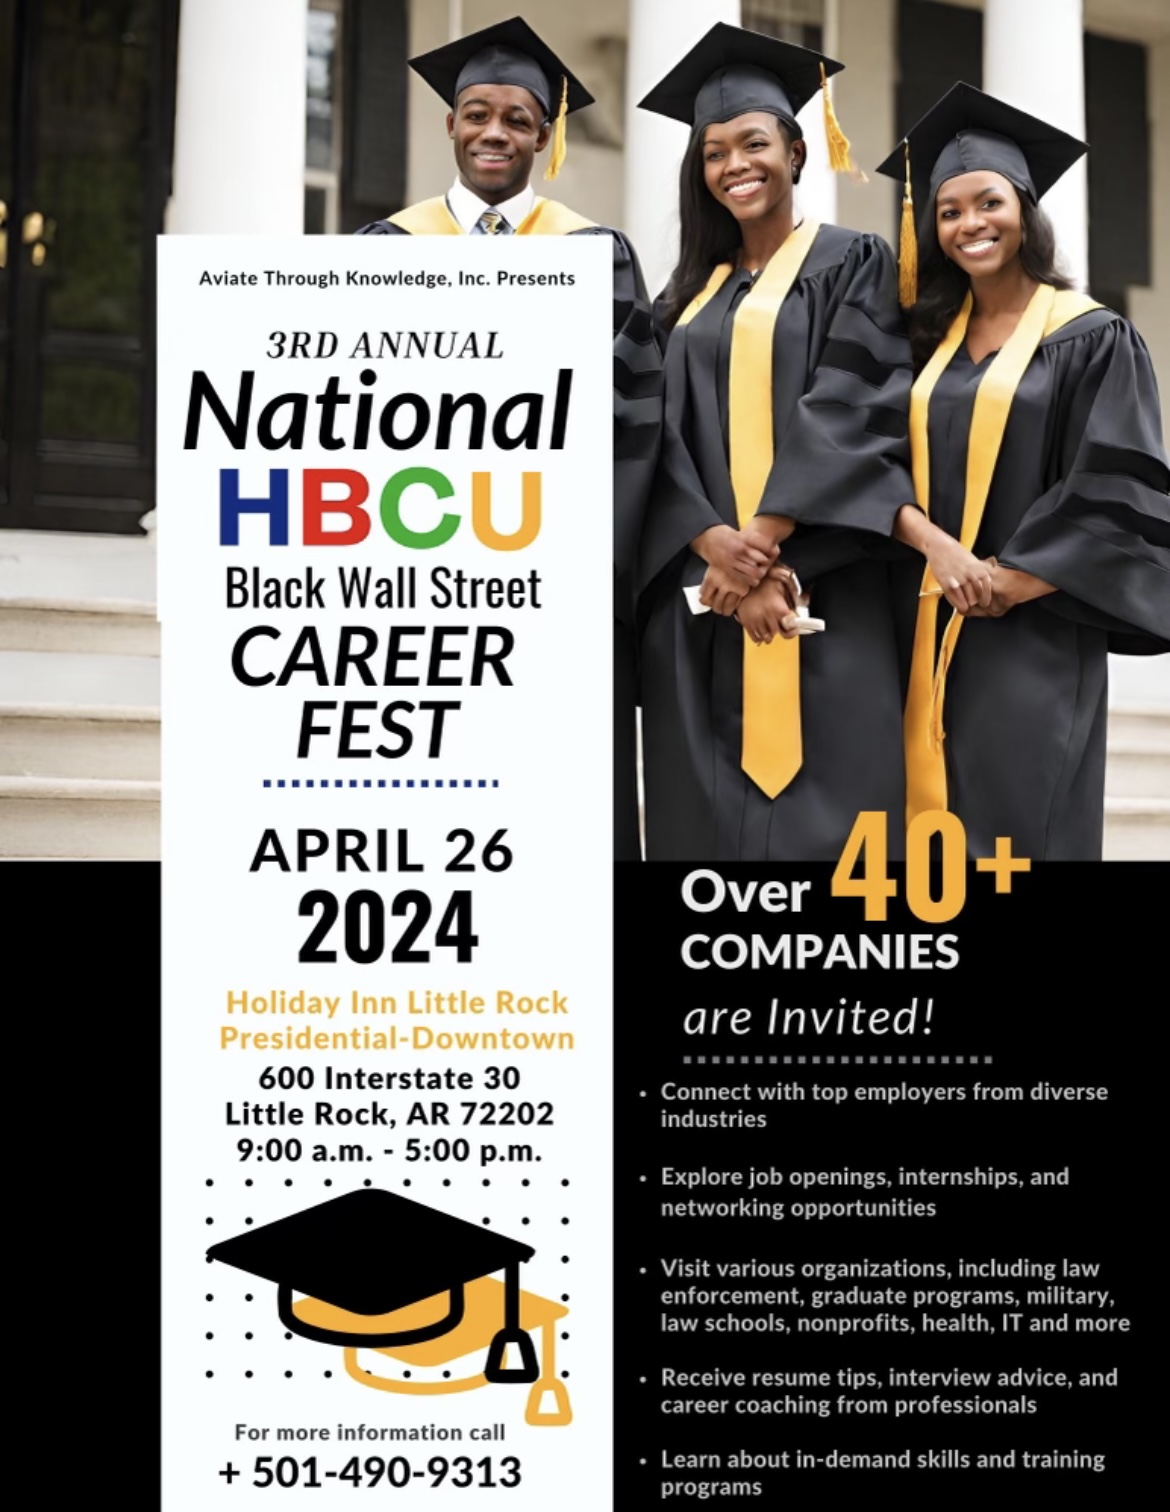 3rd Annual National HBCU Black Wall Street Career Fest